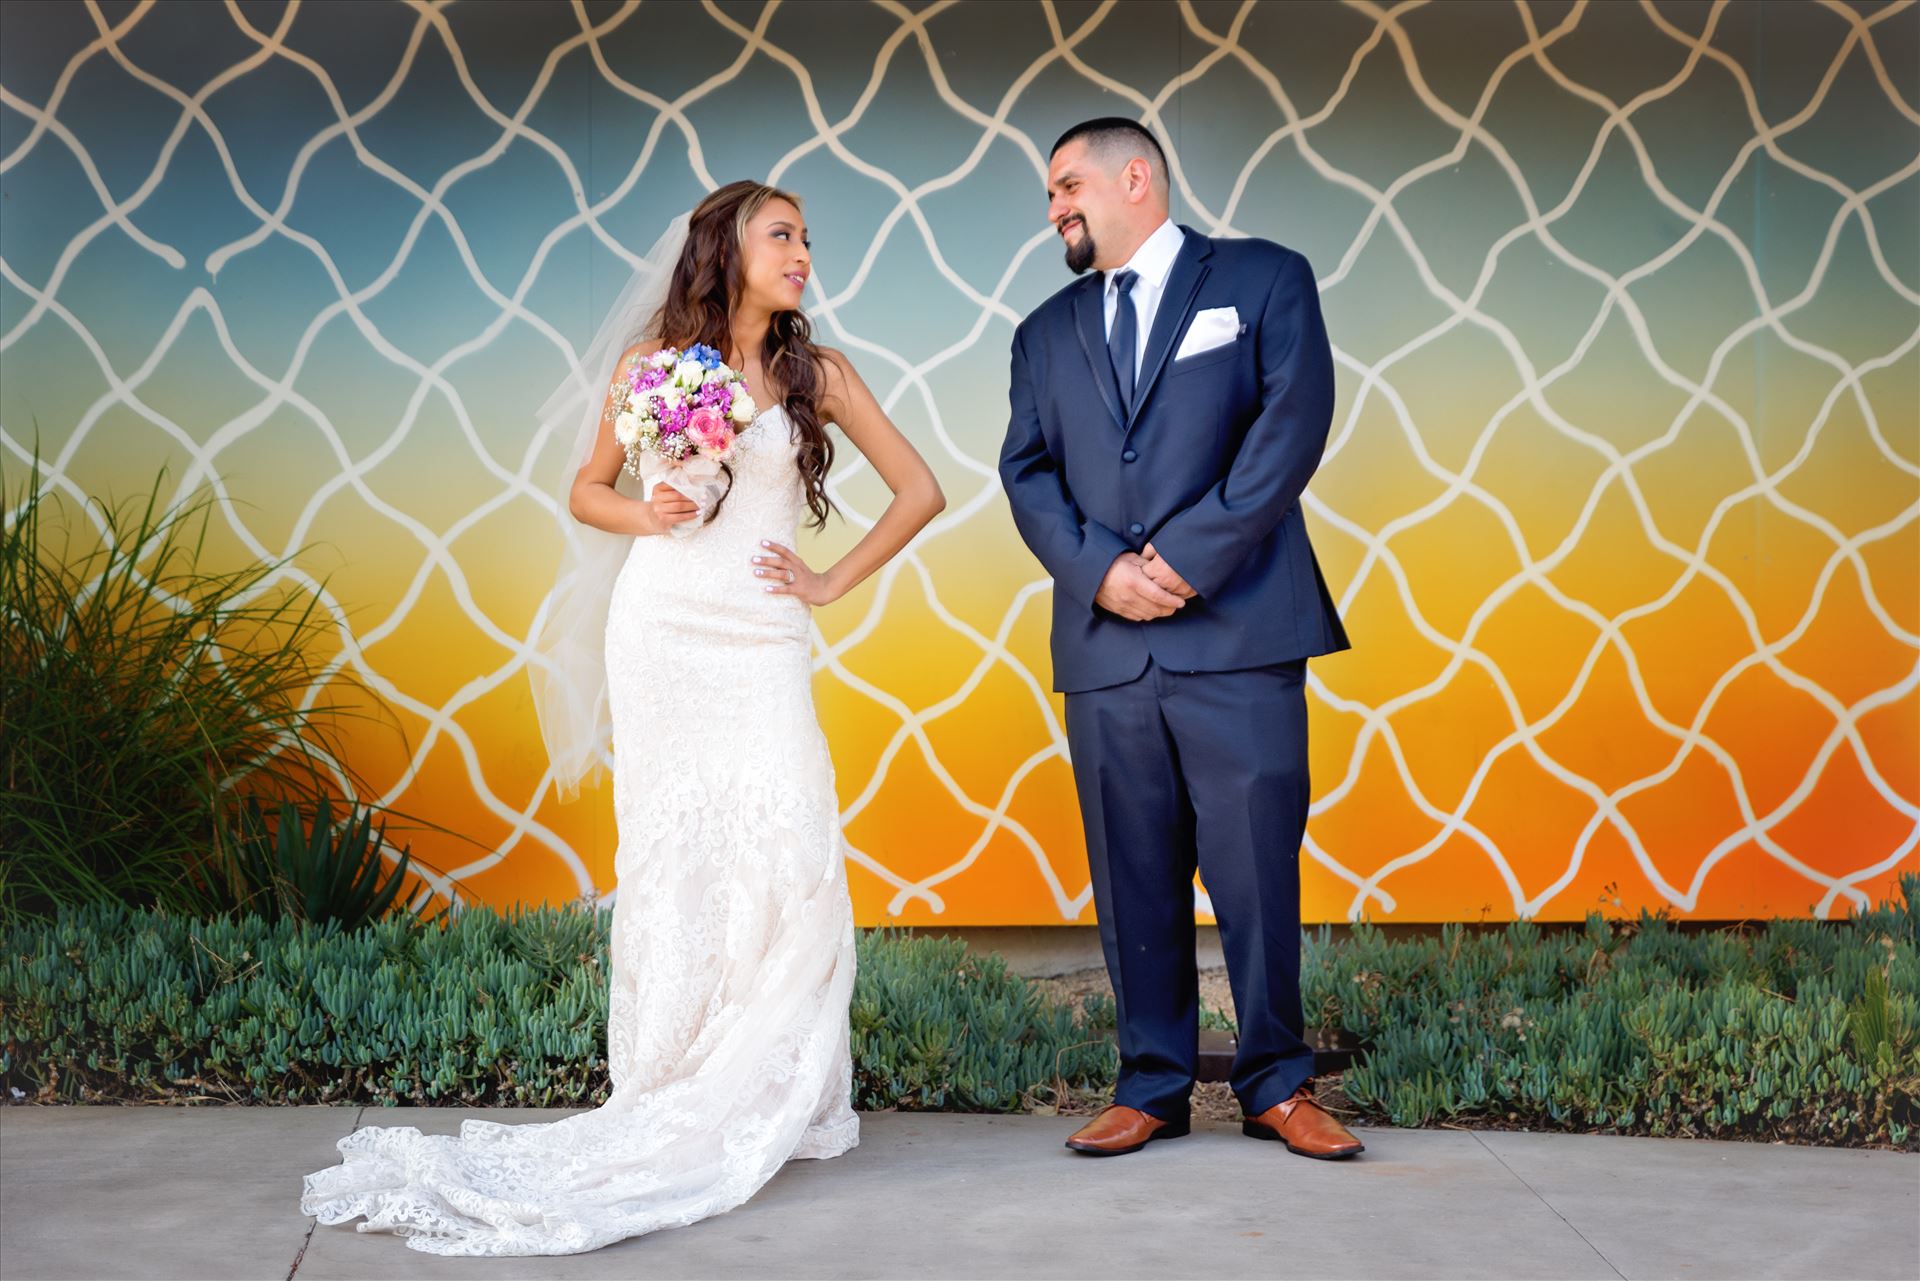 Ana and Juan 36 - Wedding photography at the Kimpton Goodland Hotel in Santa Barbara California by Mirror's Edge Photography.  Retro Chic Wedding Bride and Groom by Sarah Williams